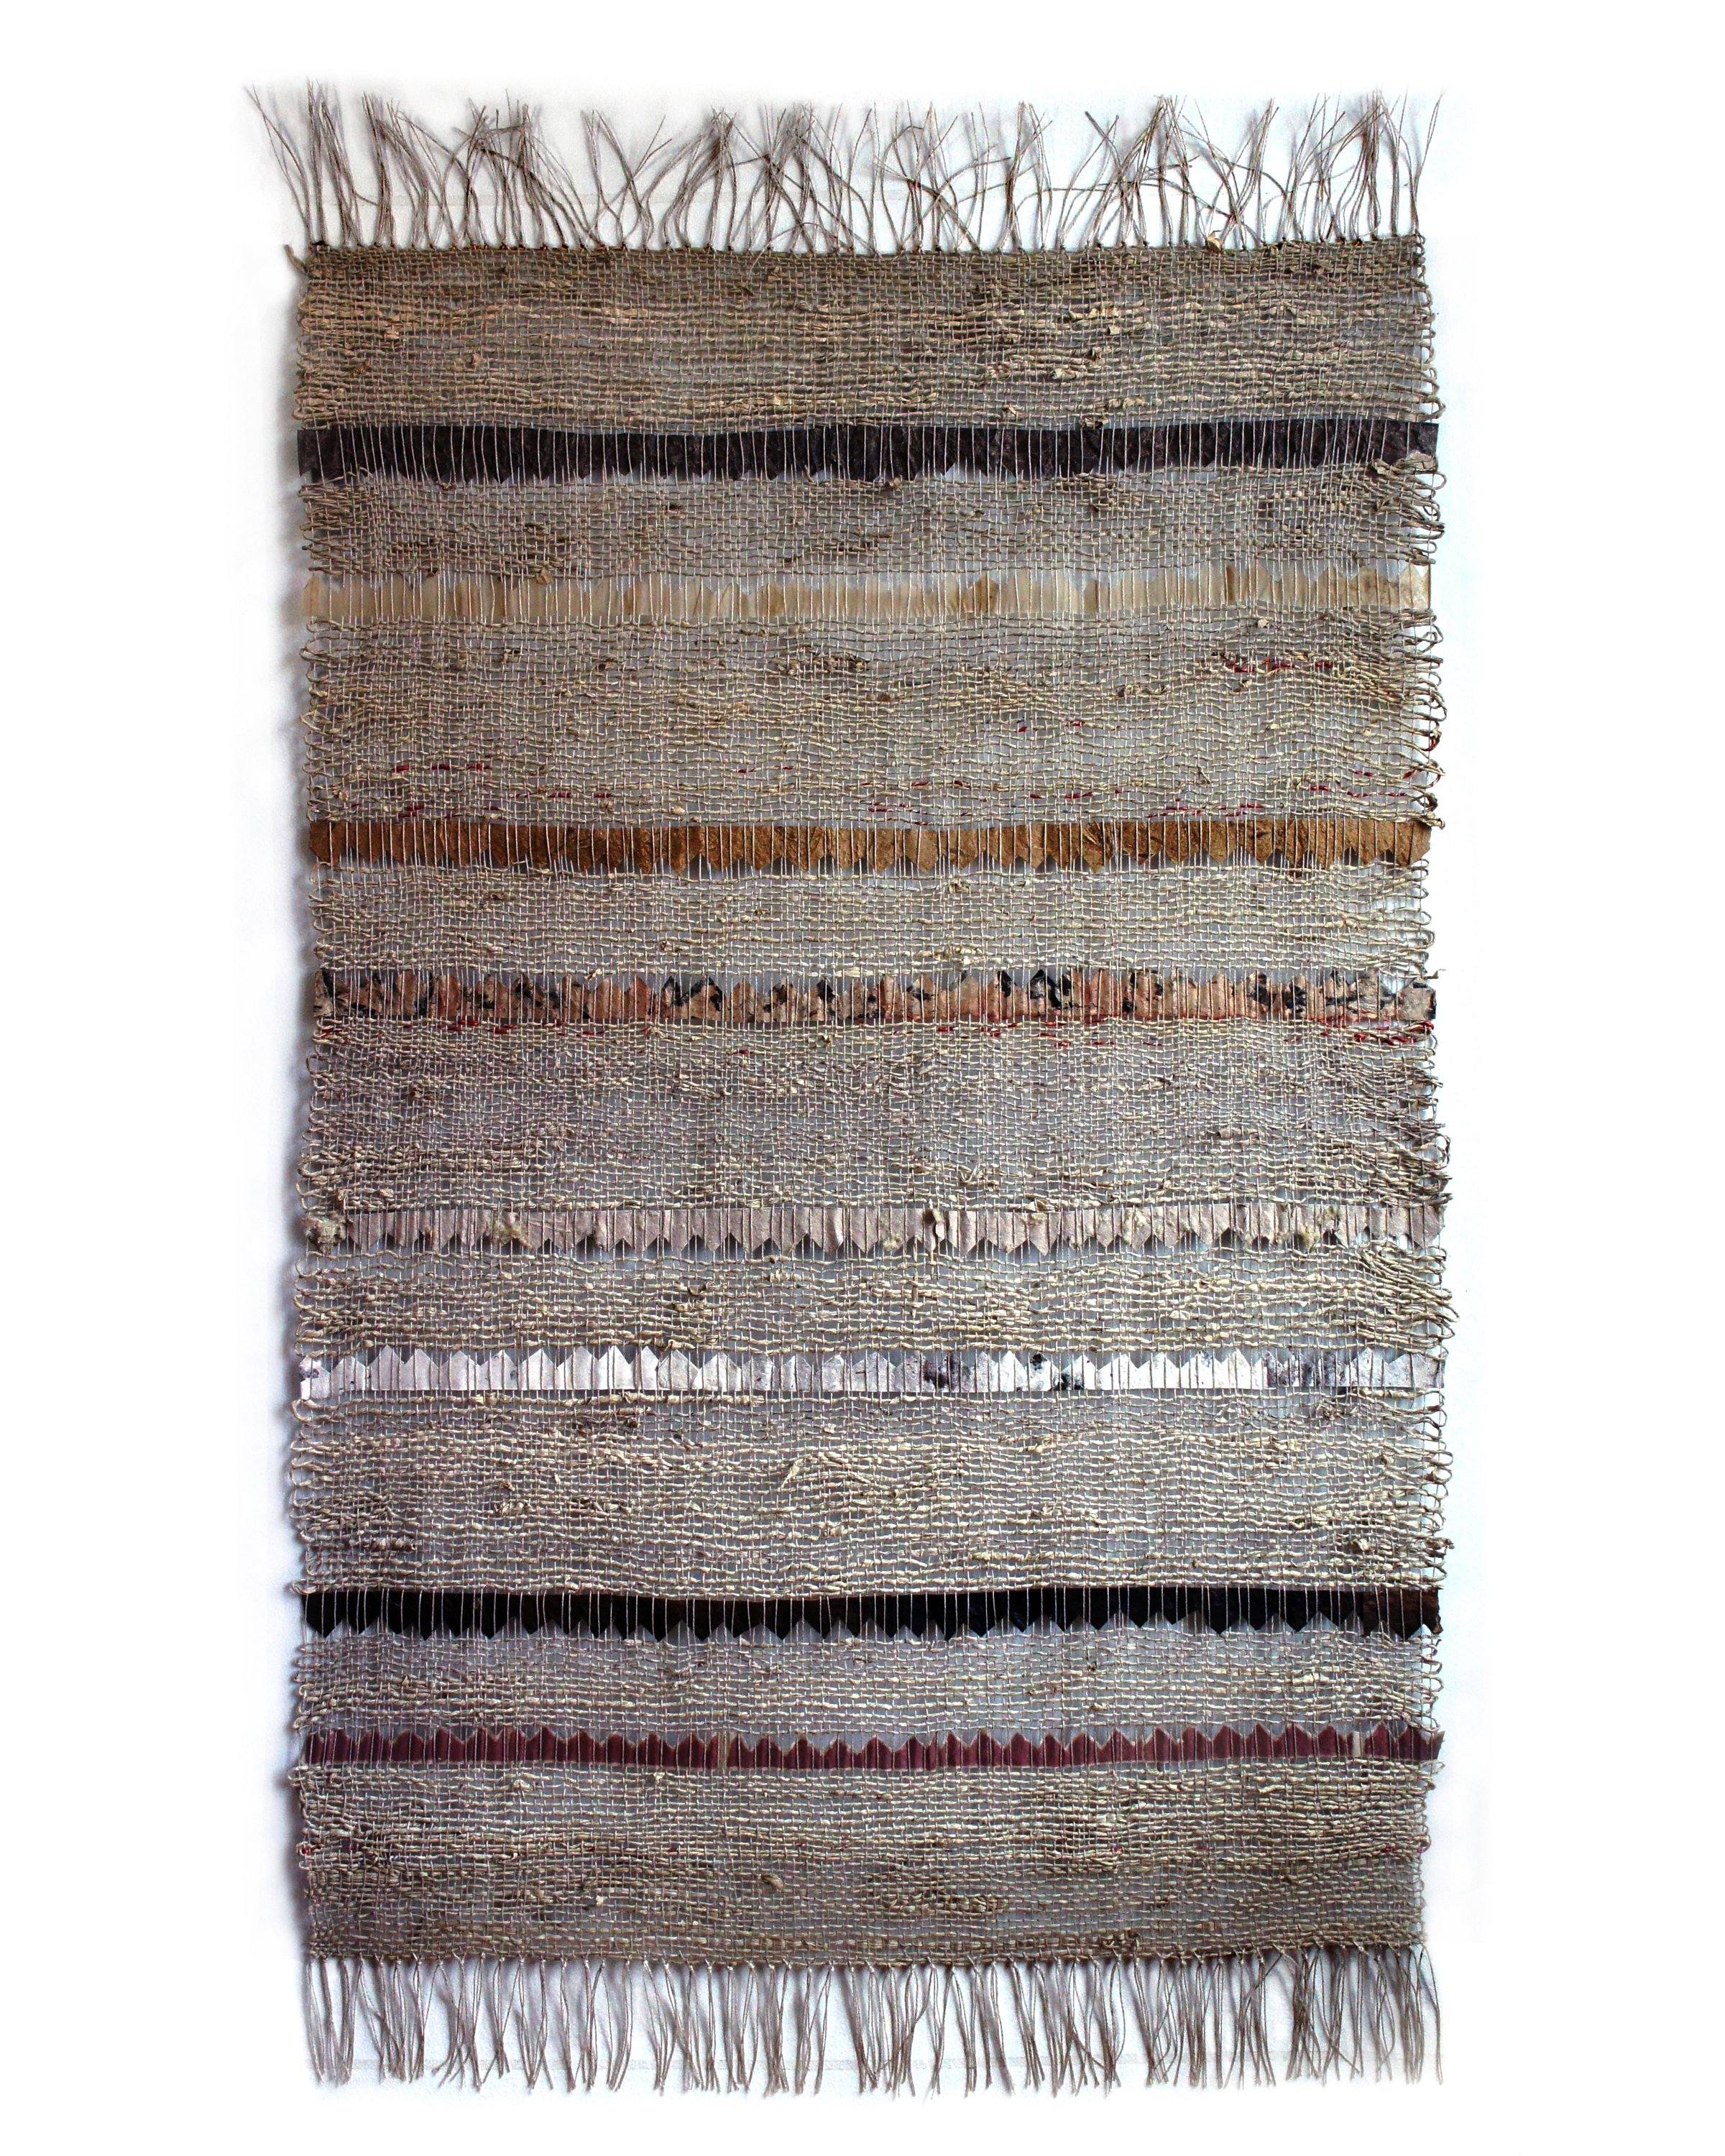   Mokosh’s Rug, hand spun flax paper yarn, archive of papermaking scraps, 3 x 5 feet, 2021.  